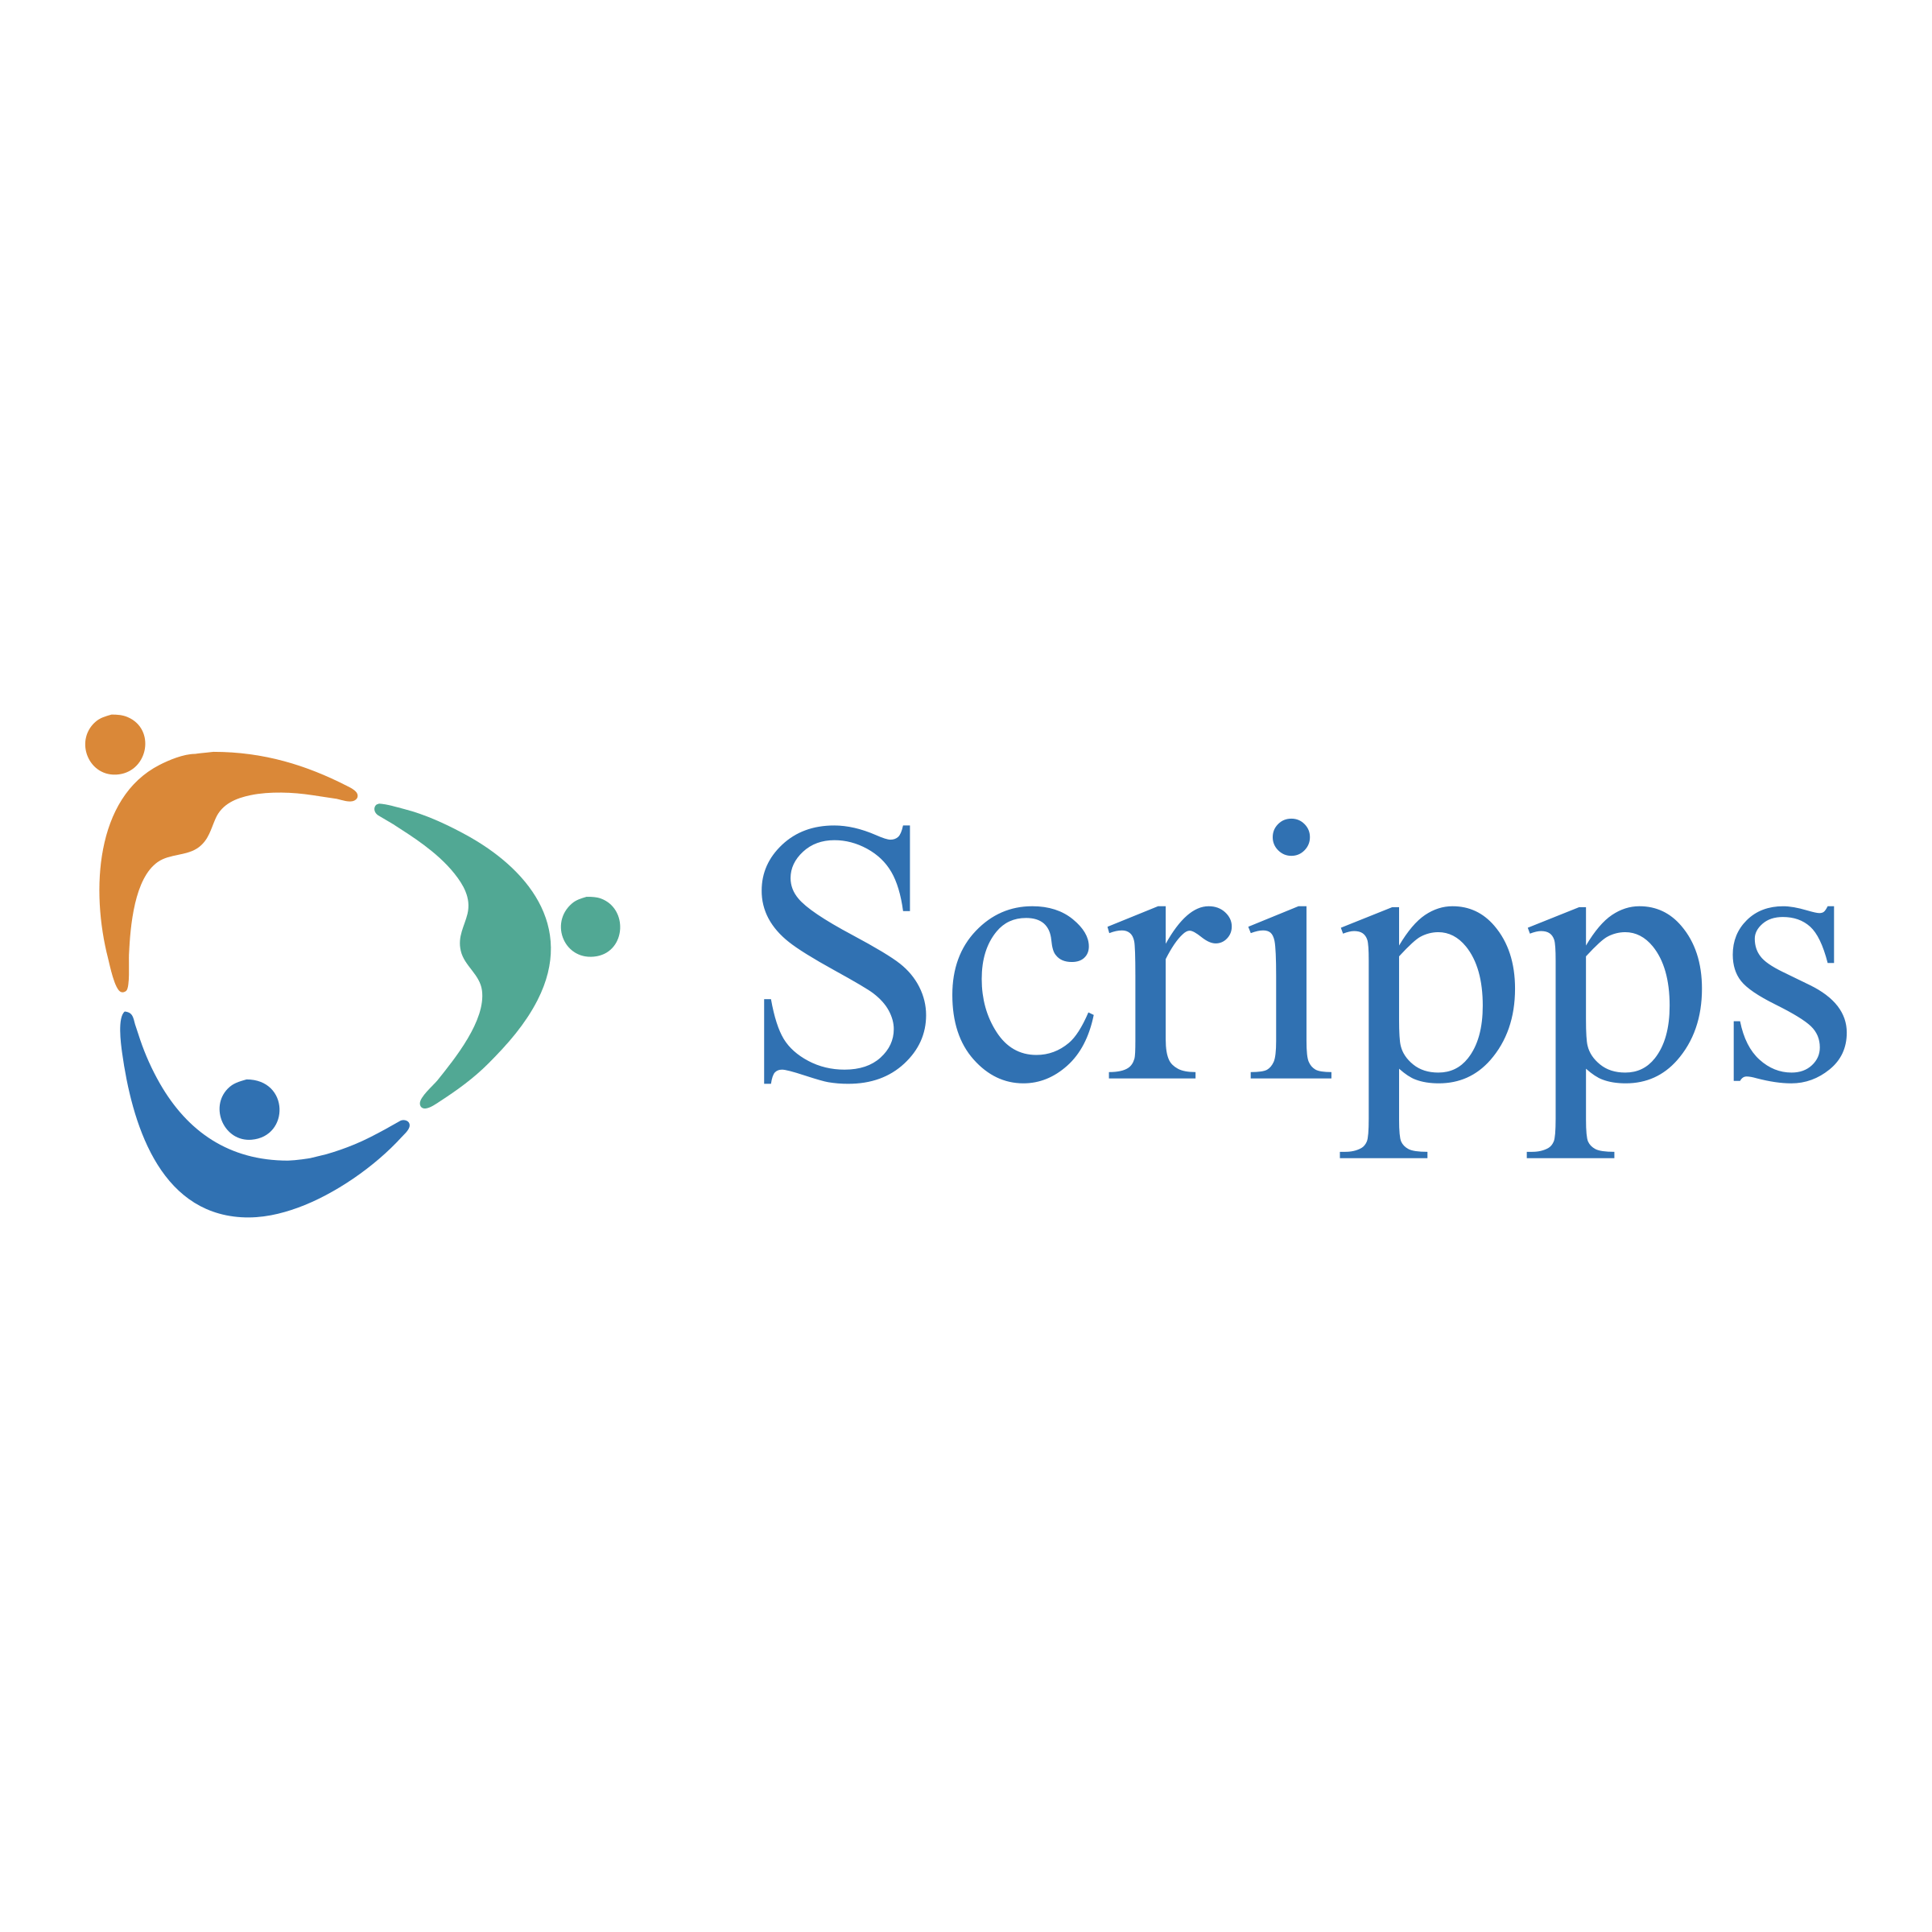 Scripps Logo - Scripps Logo PNG Transparent & SVG Vector